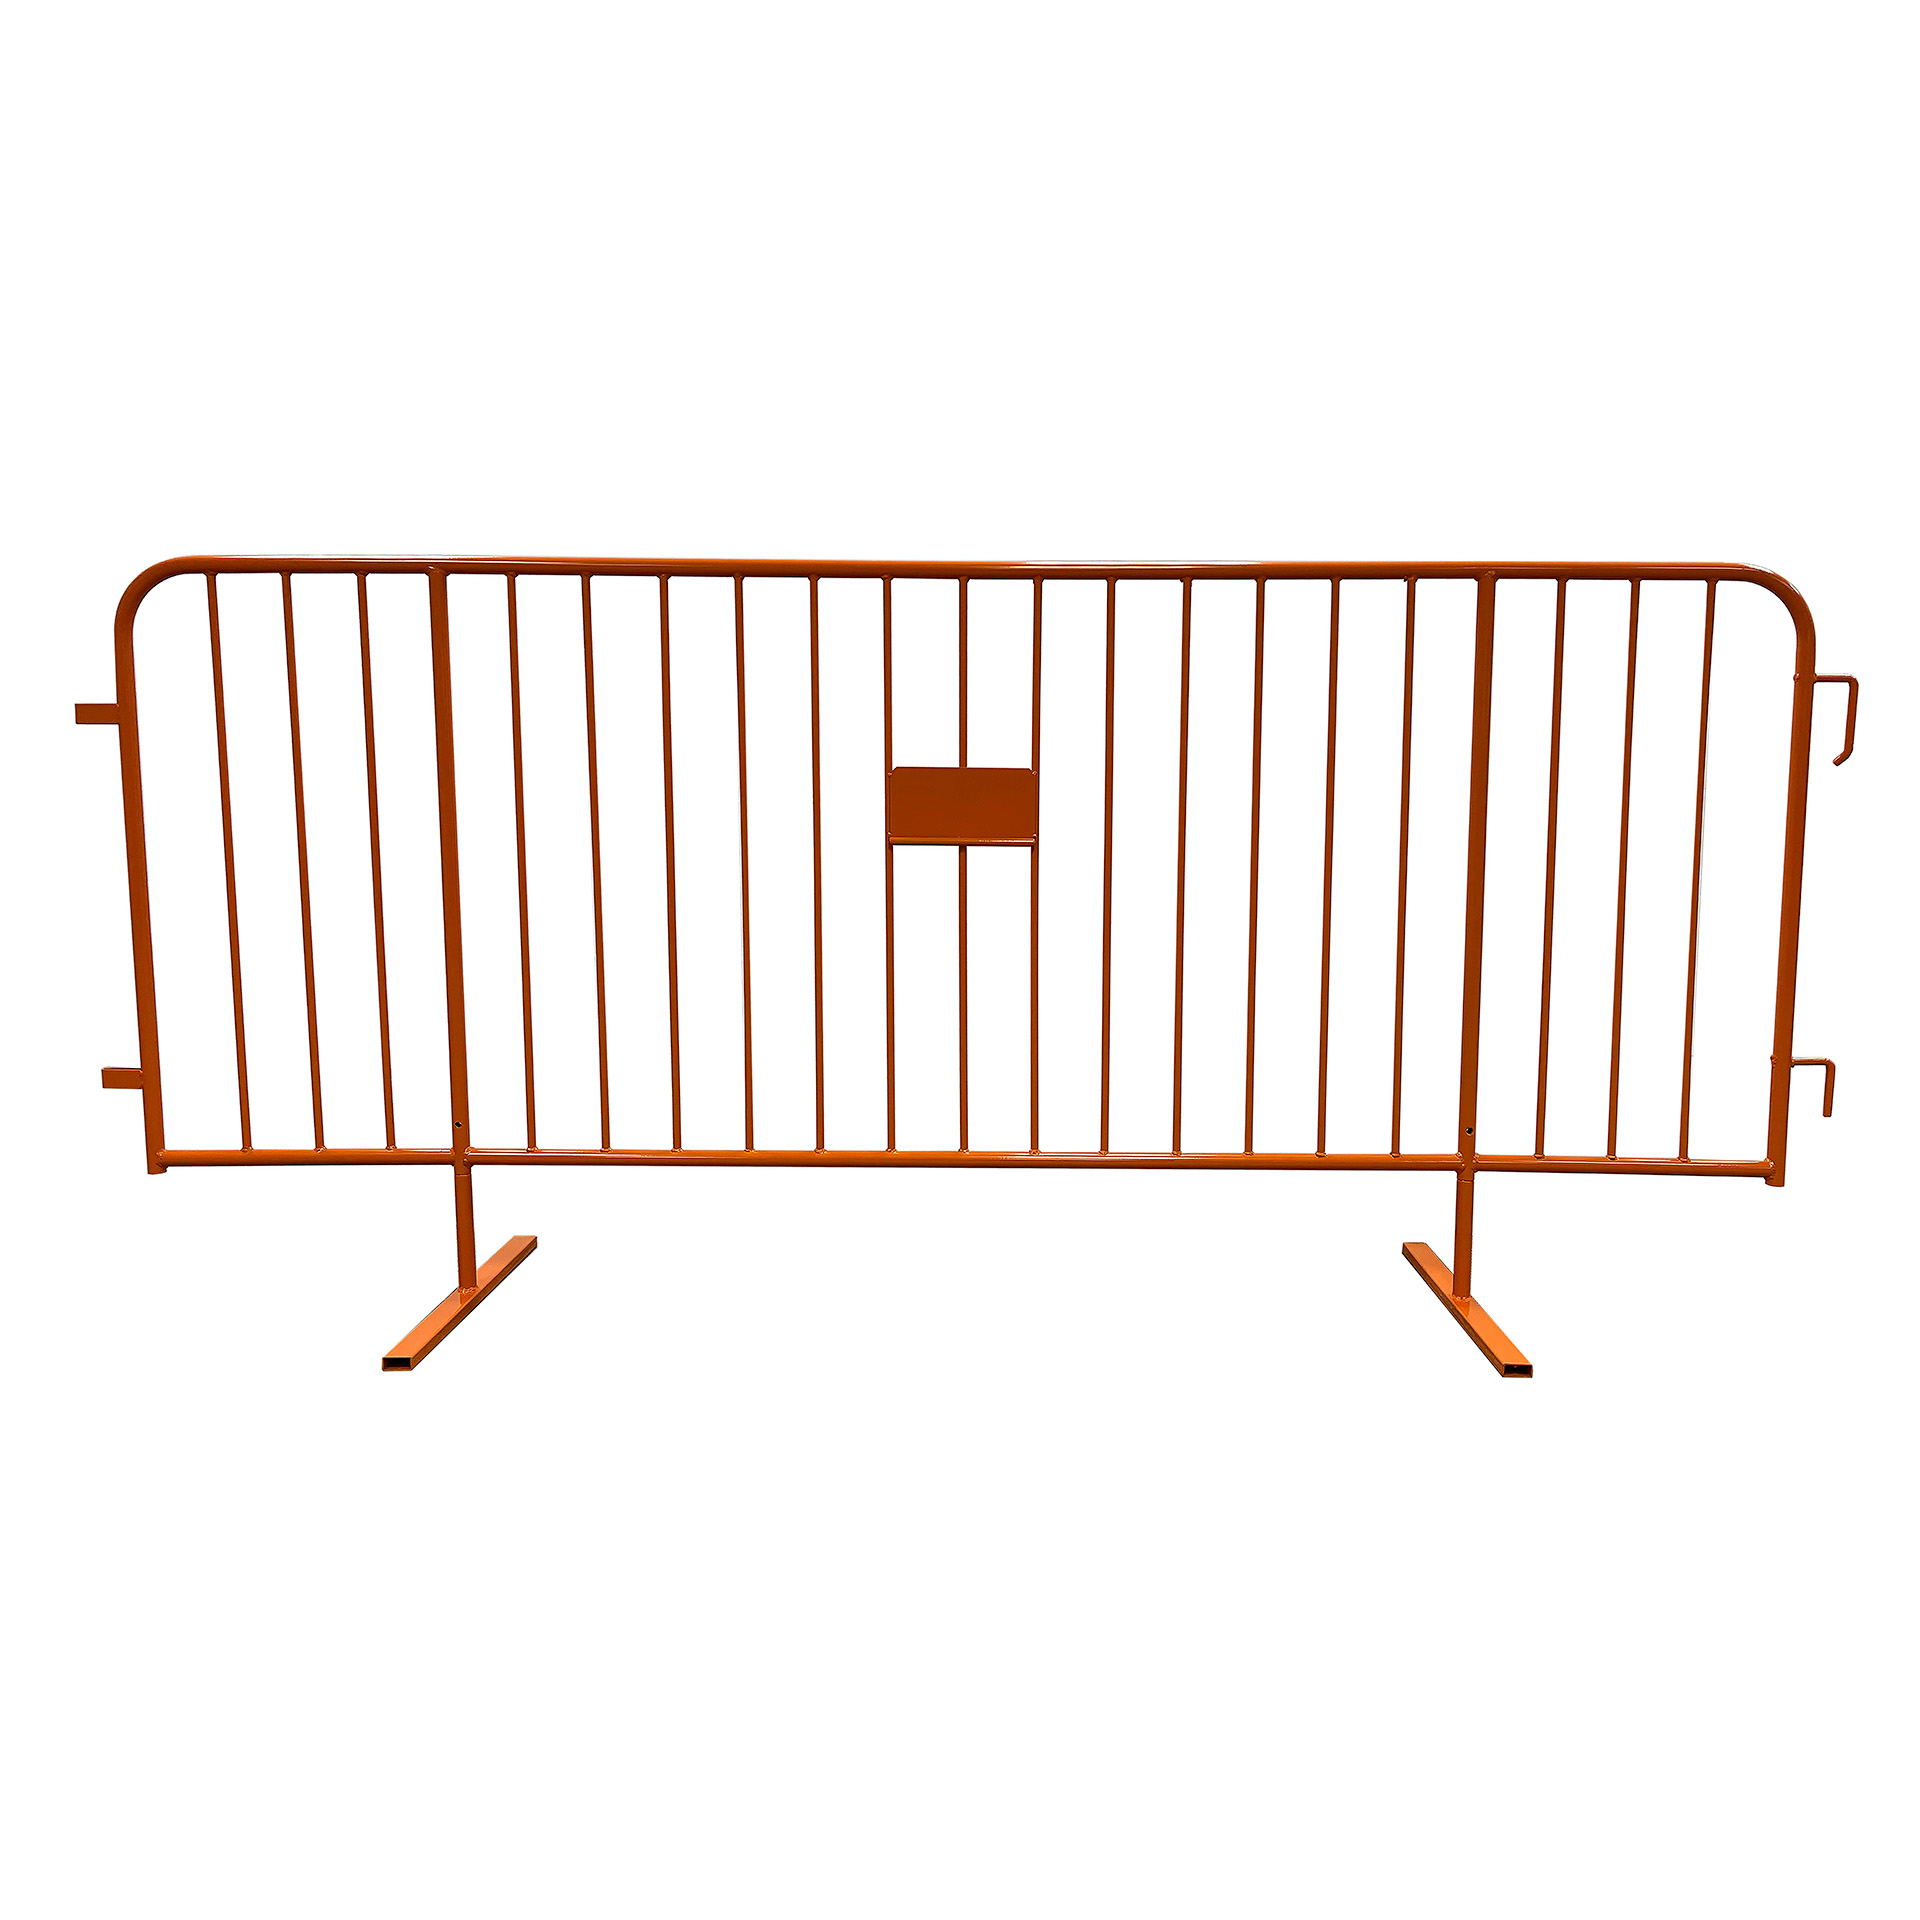 Orange 1 inch barricade